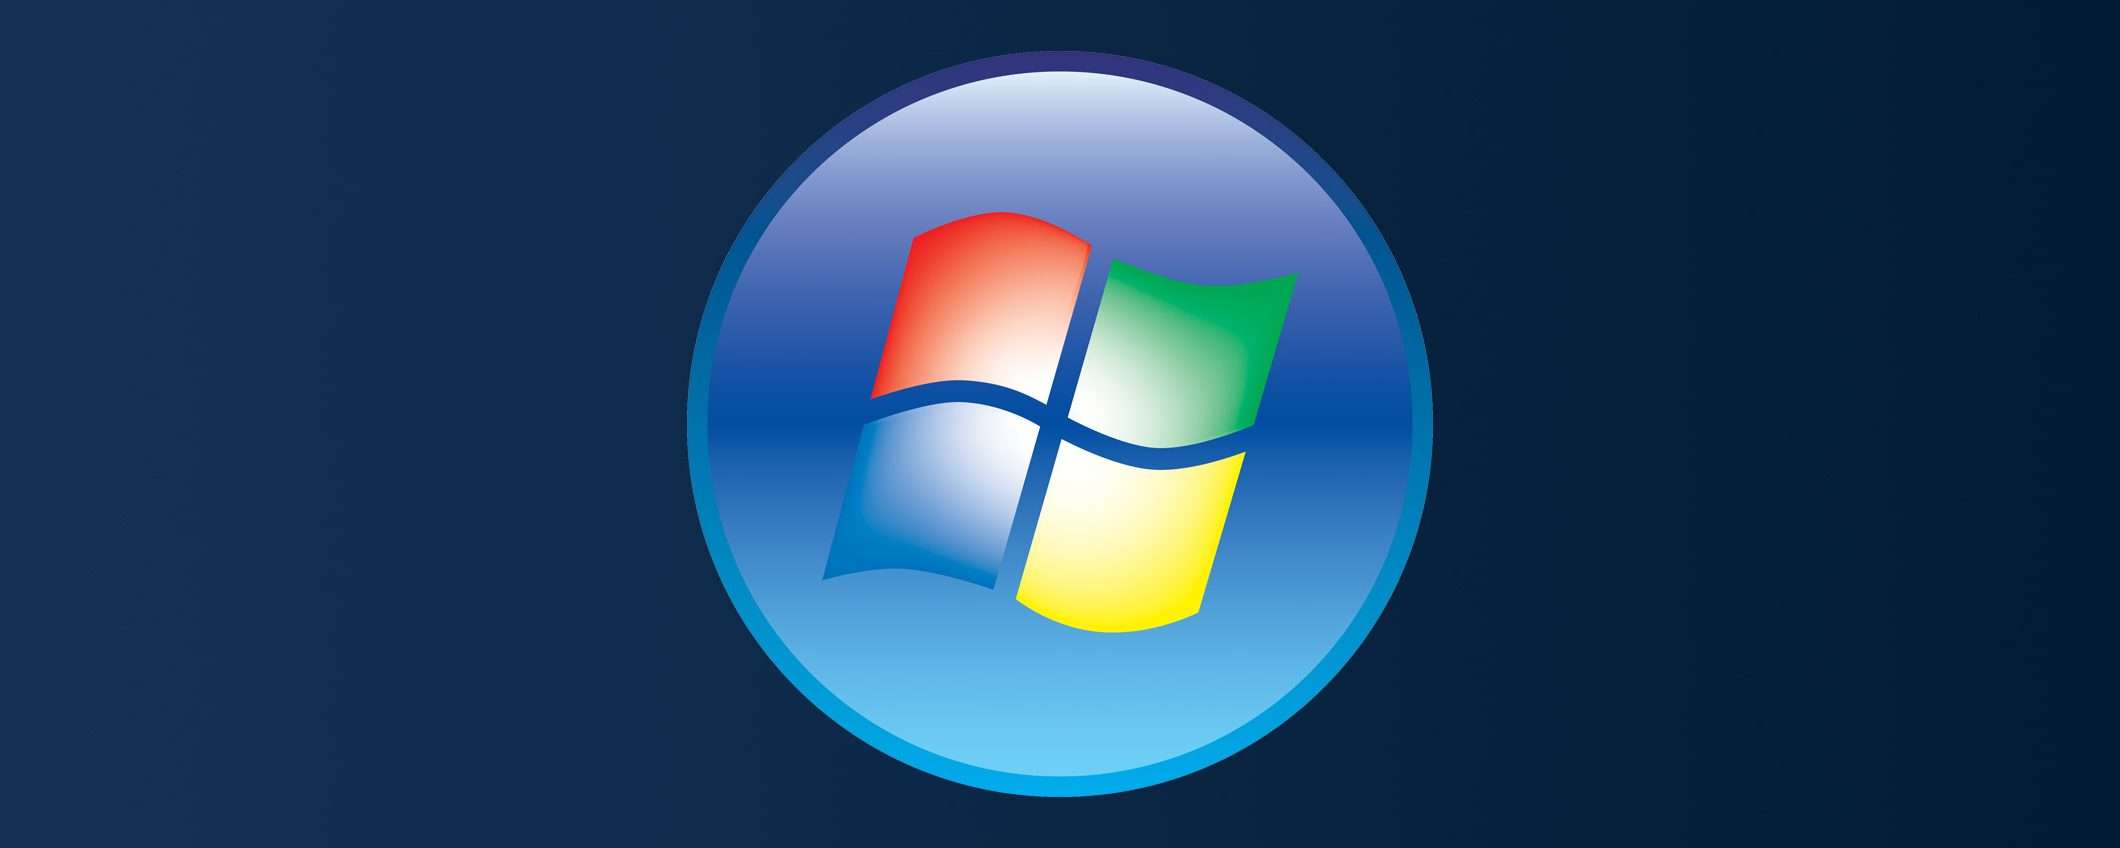 Windows 11: widget di terze parti come su Vista?